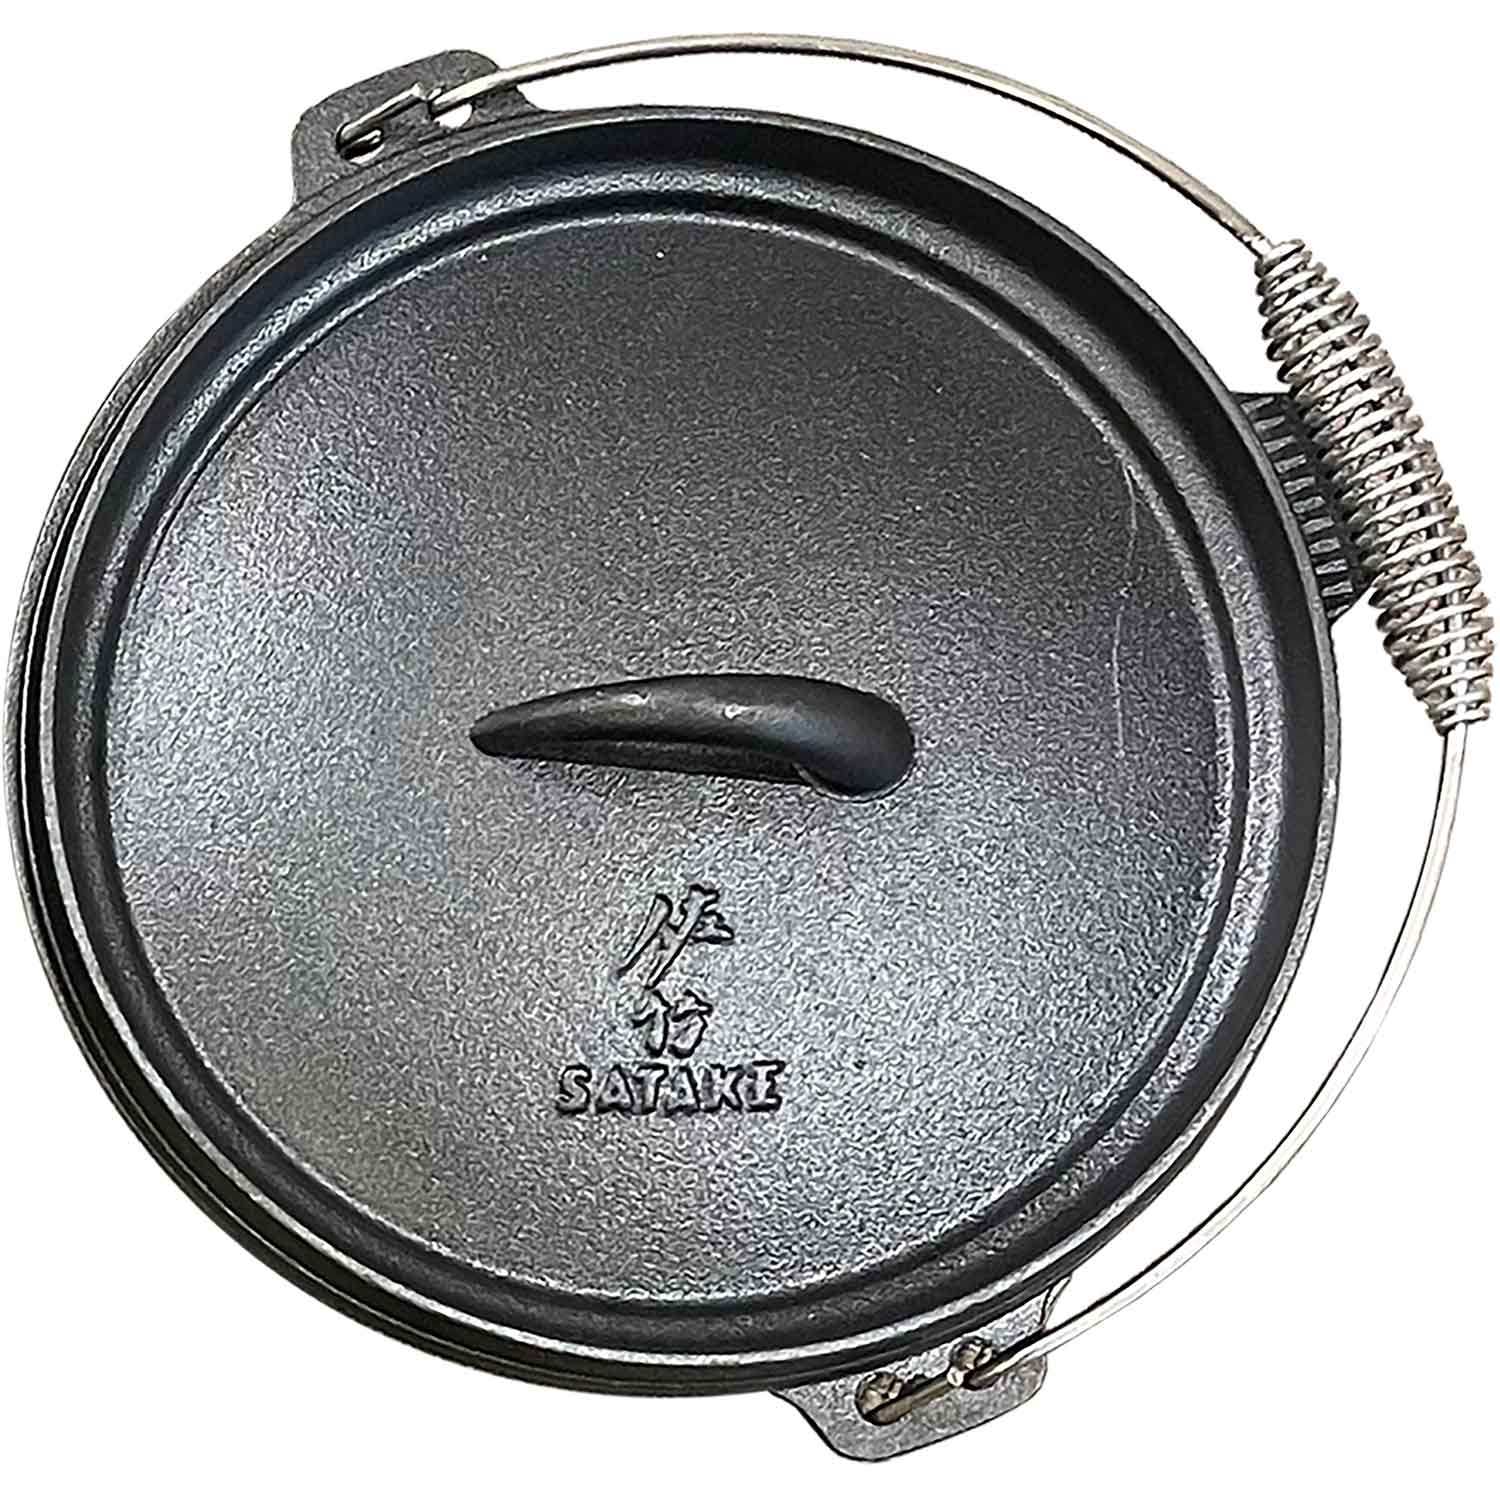 https://royaldesign.com/image/2/satake-dutch-oven-casserole-35-l-0